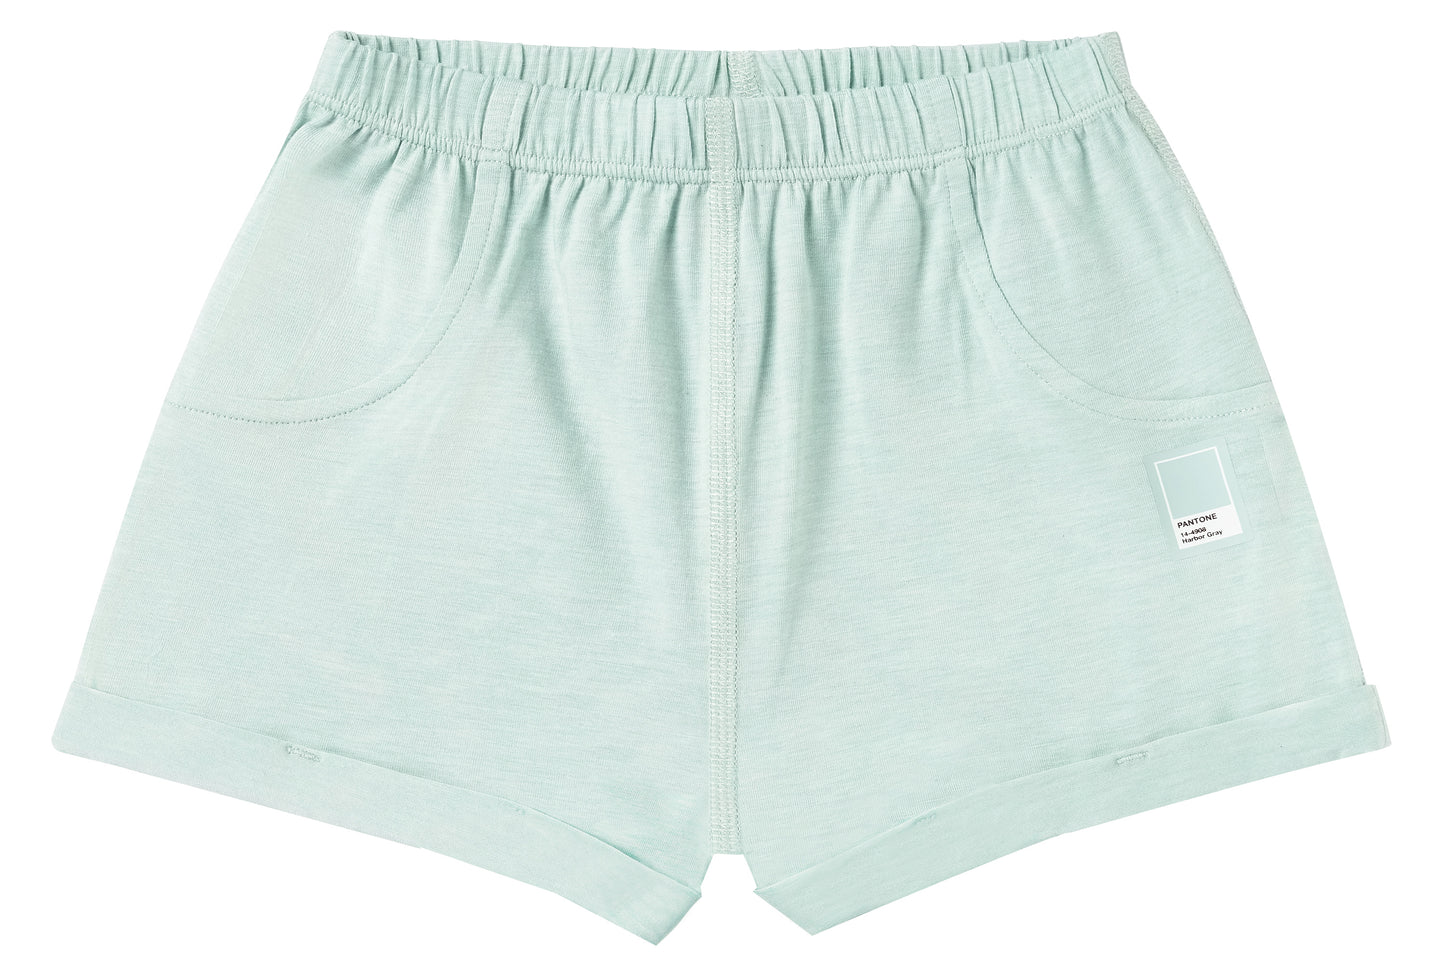 Shorts (Bamboo Jersey) - Pantone Harbor Gray